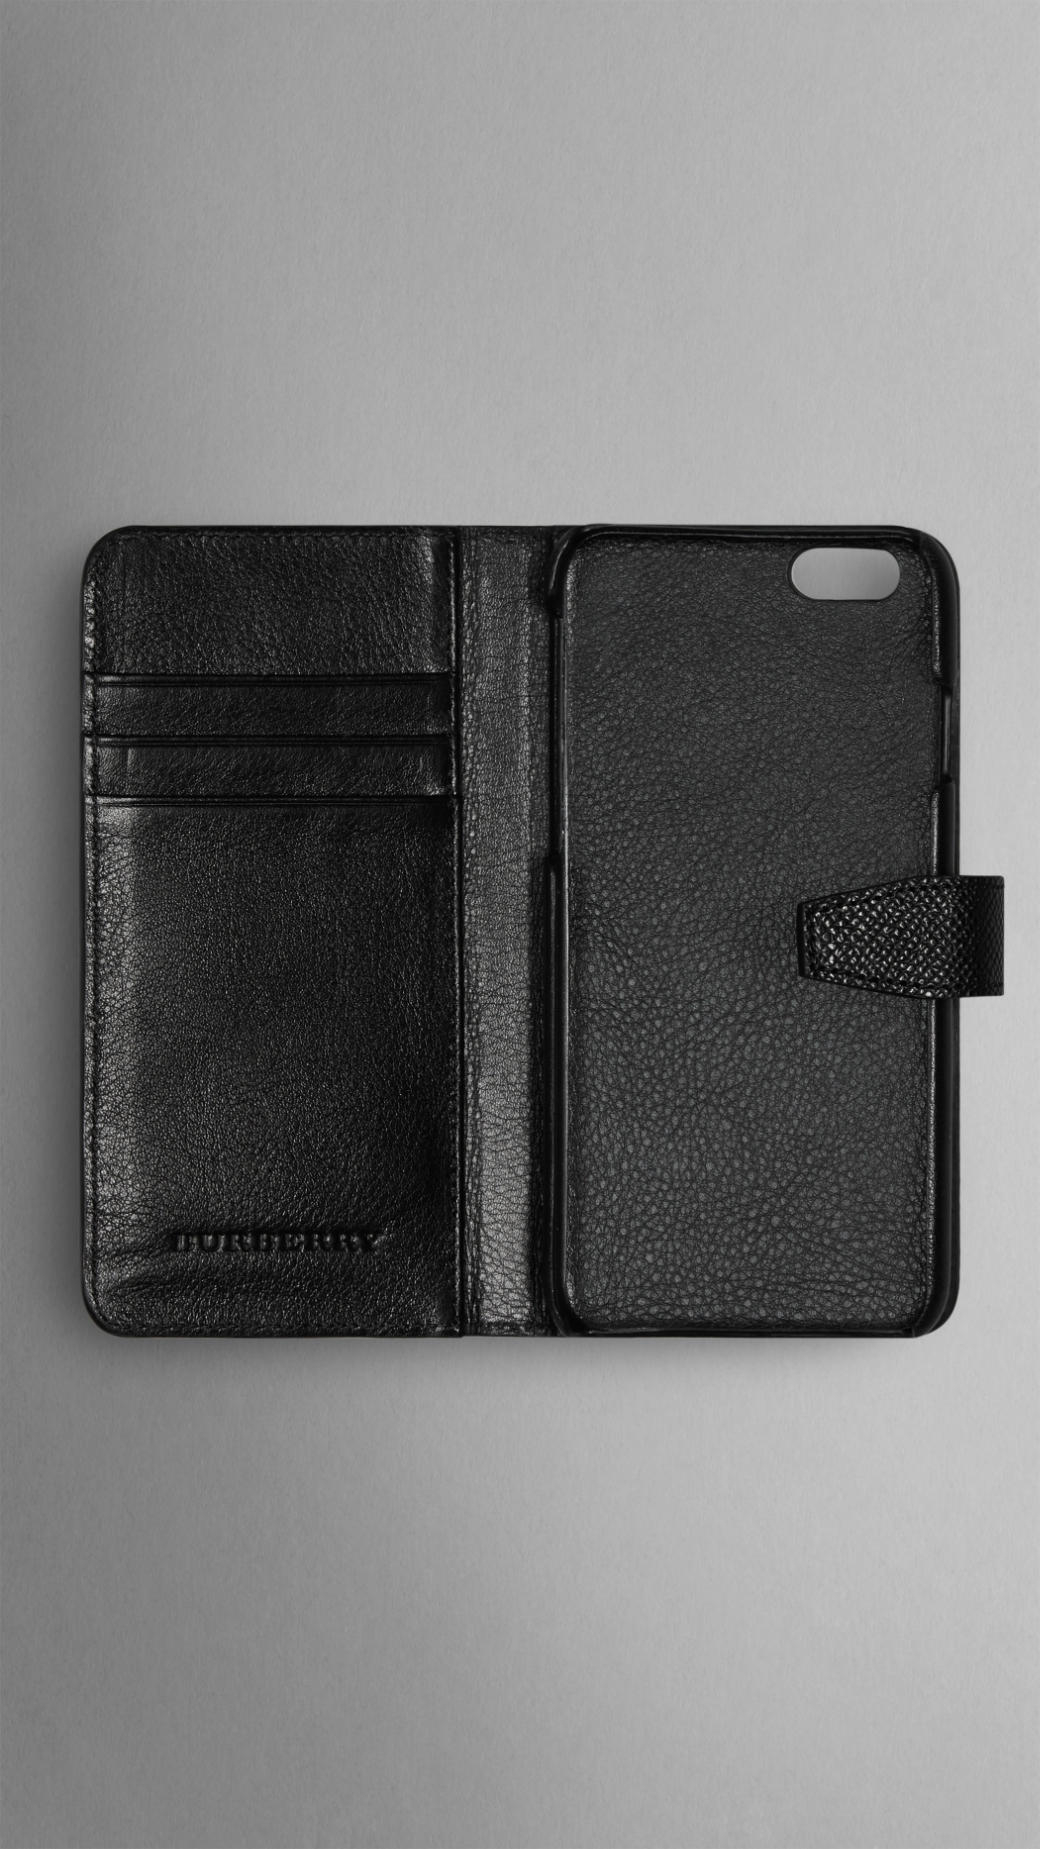 burberry iphone 8 plus wallet case